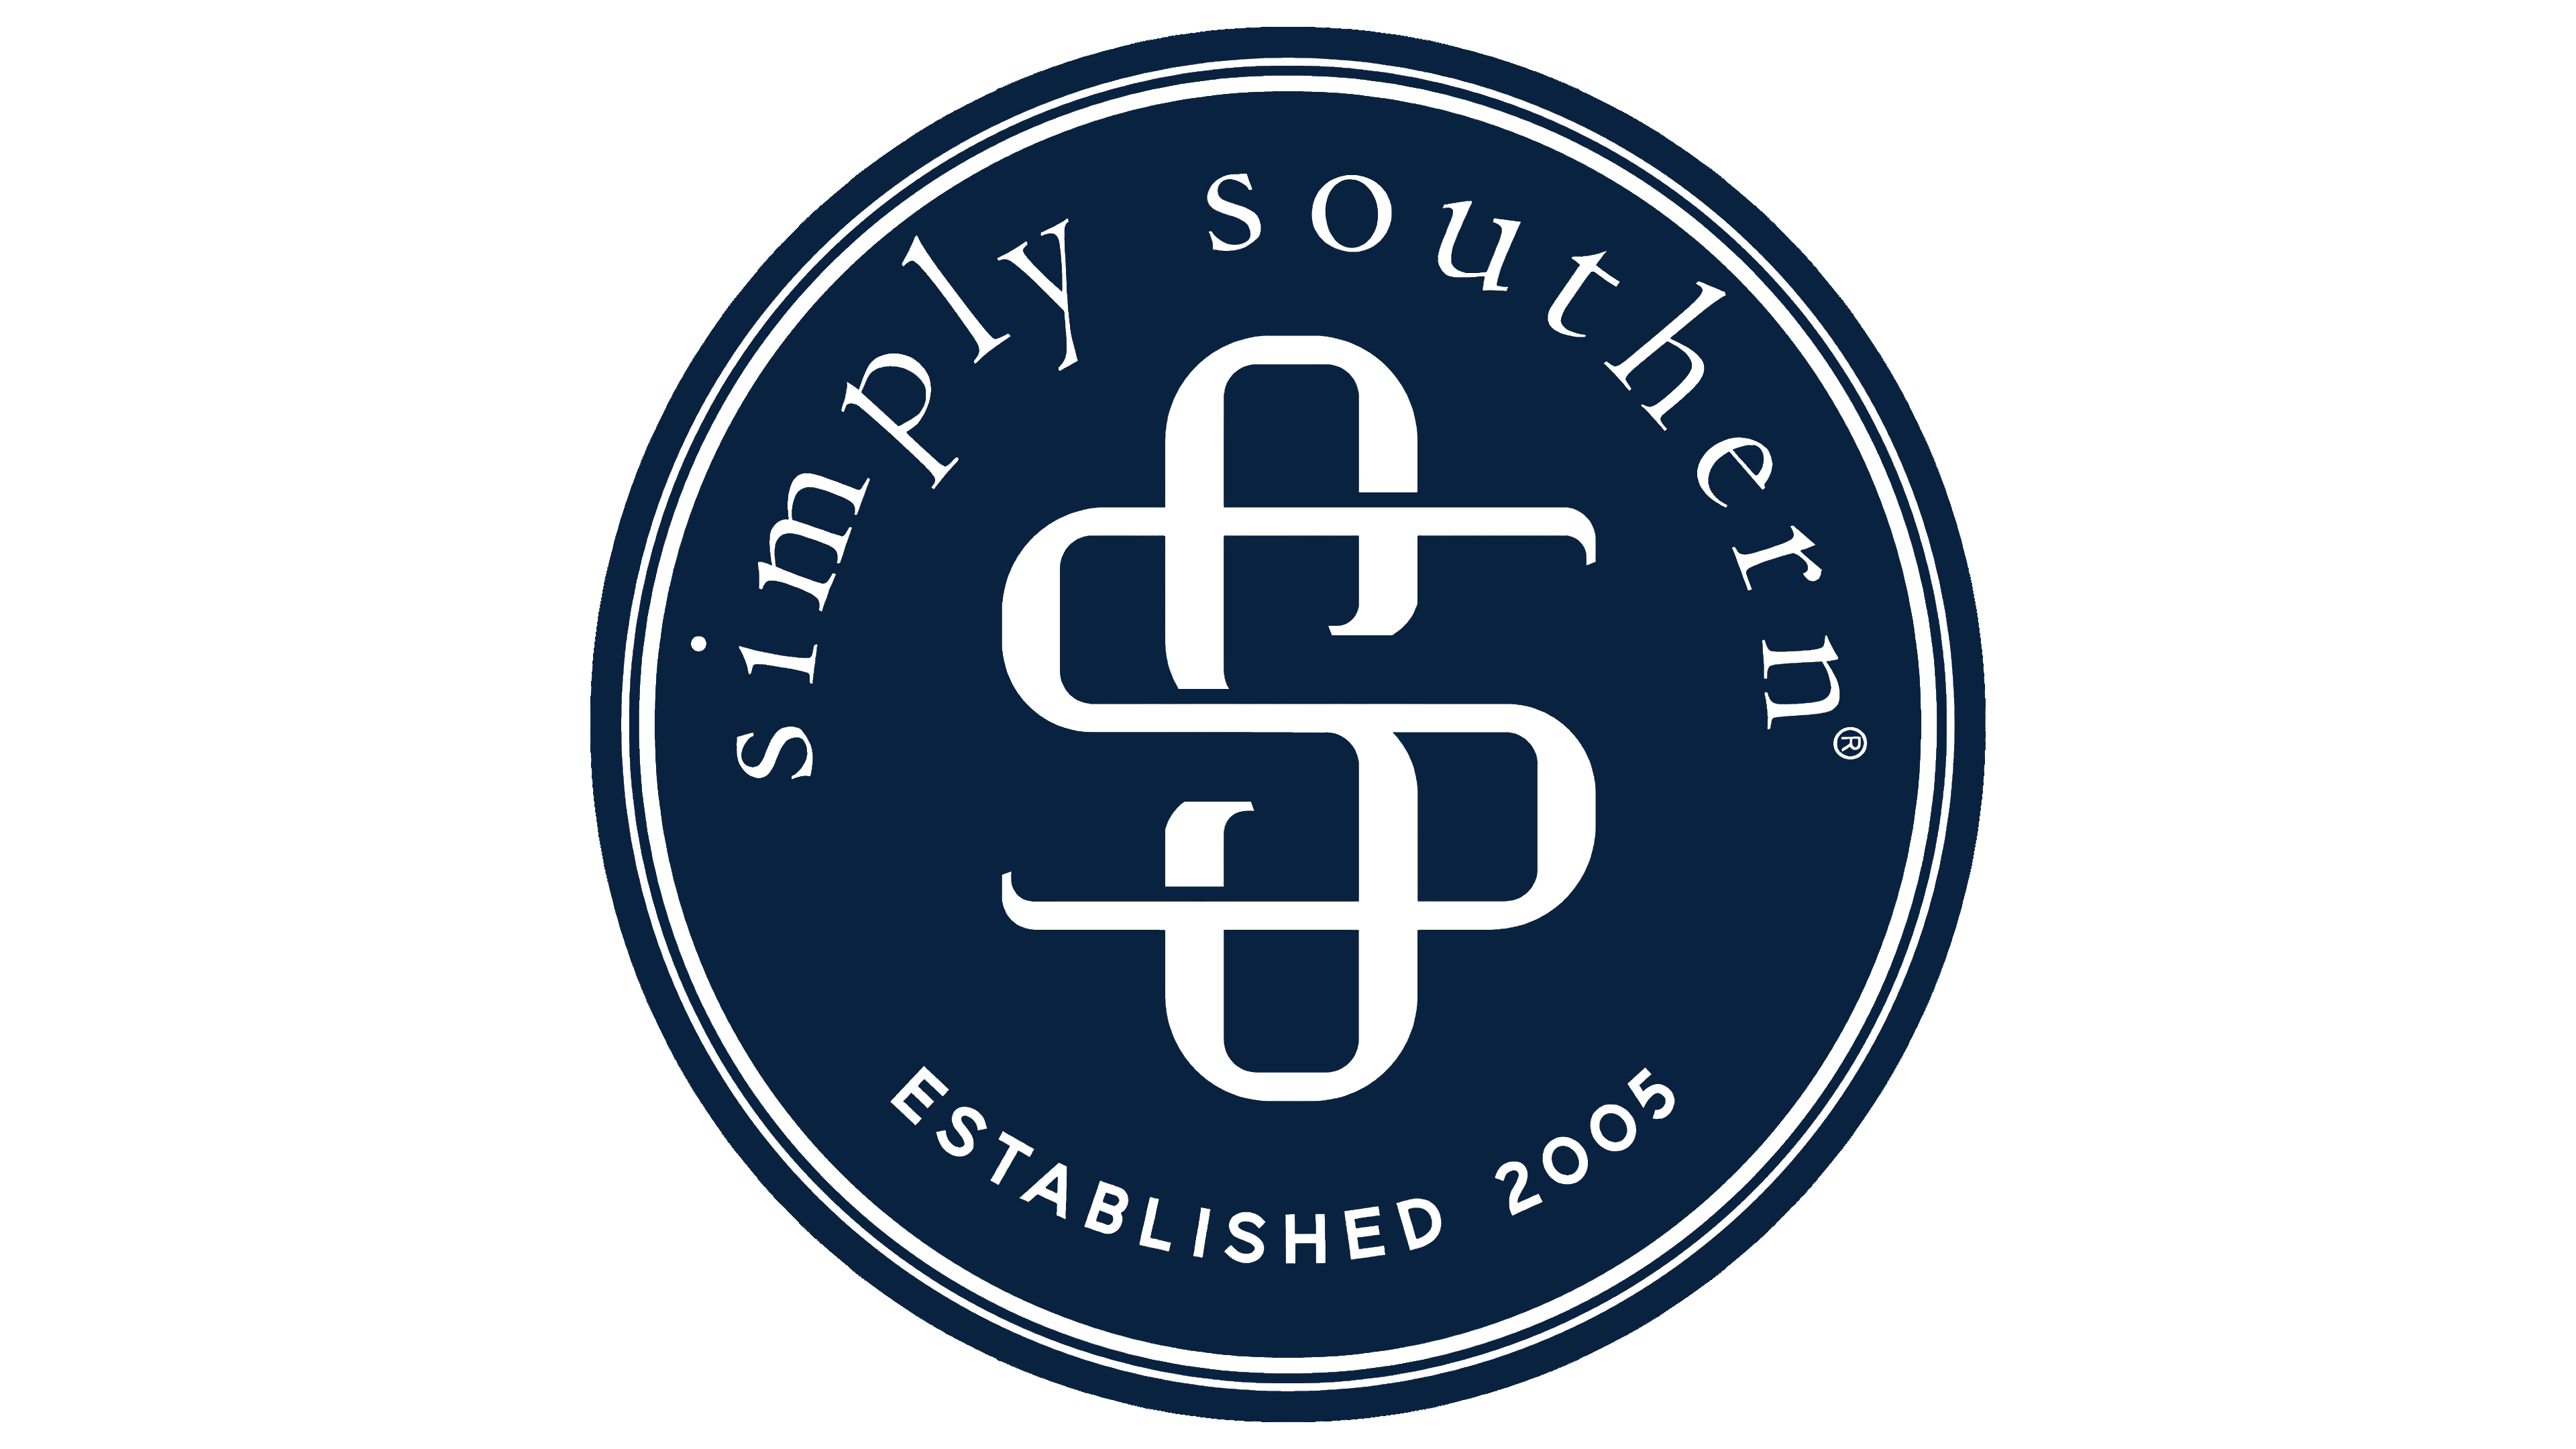 Simply Southern Logo